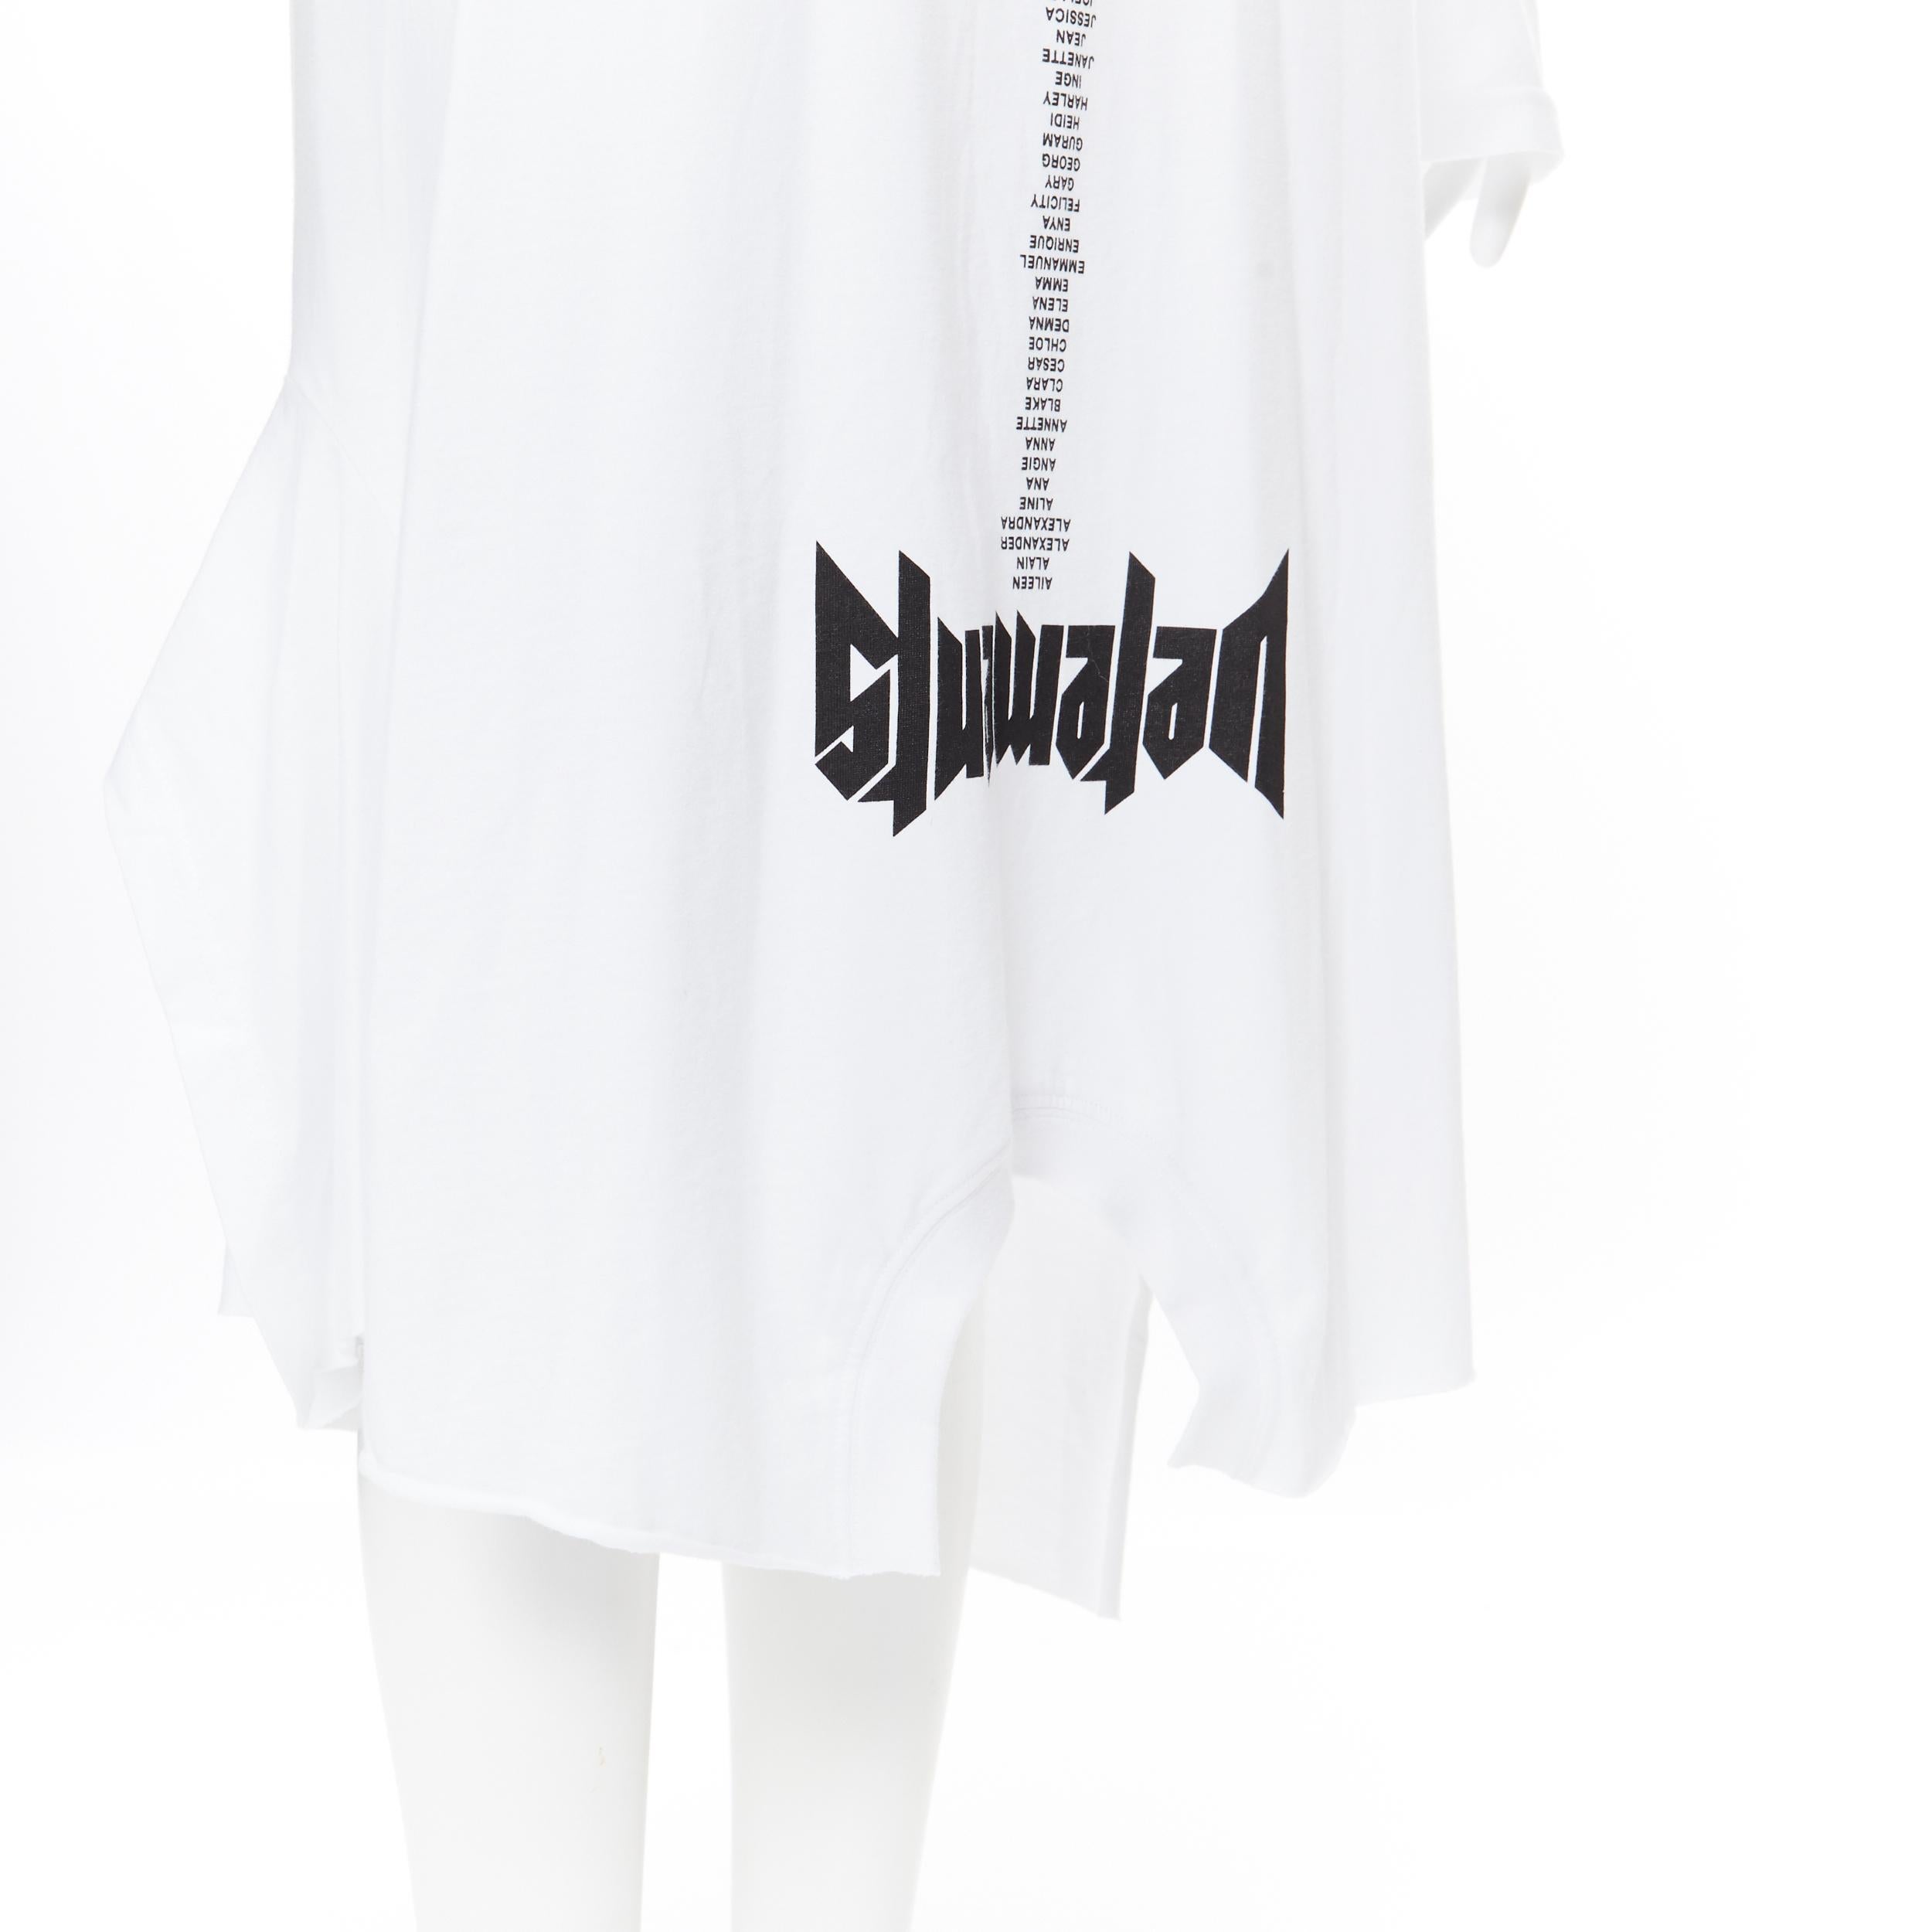 new VETEMENTS Demna Gvasalia white deconstructed band t-shirt hooded dress S 1